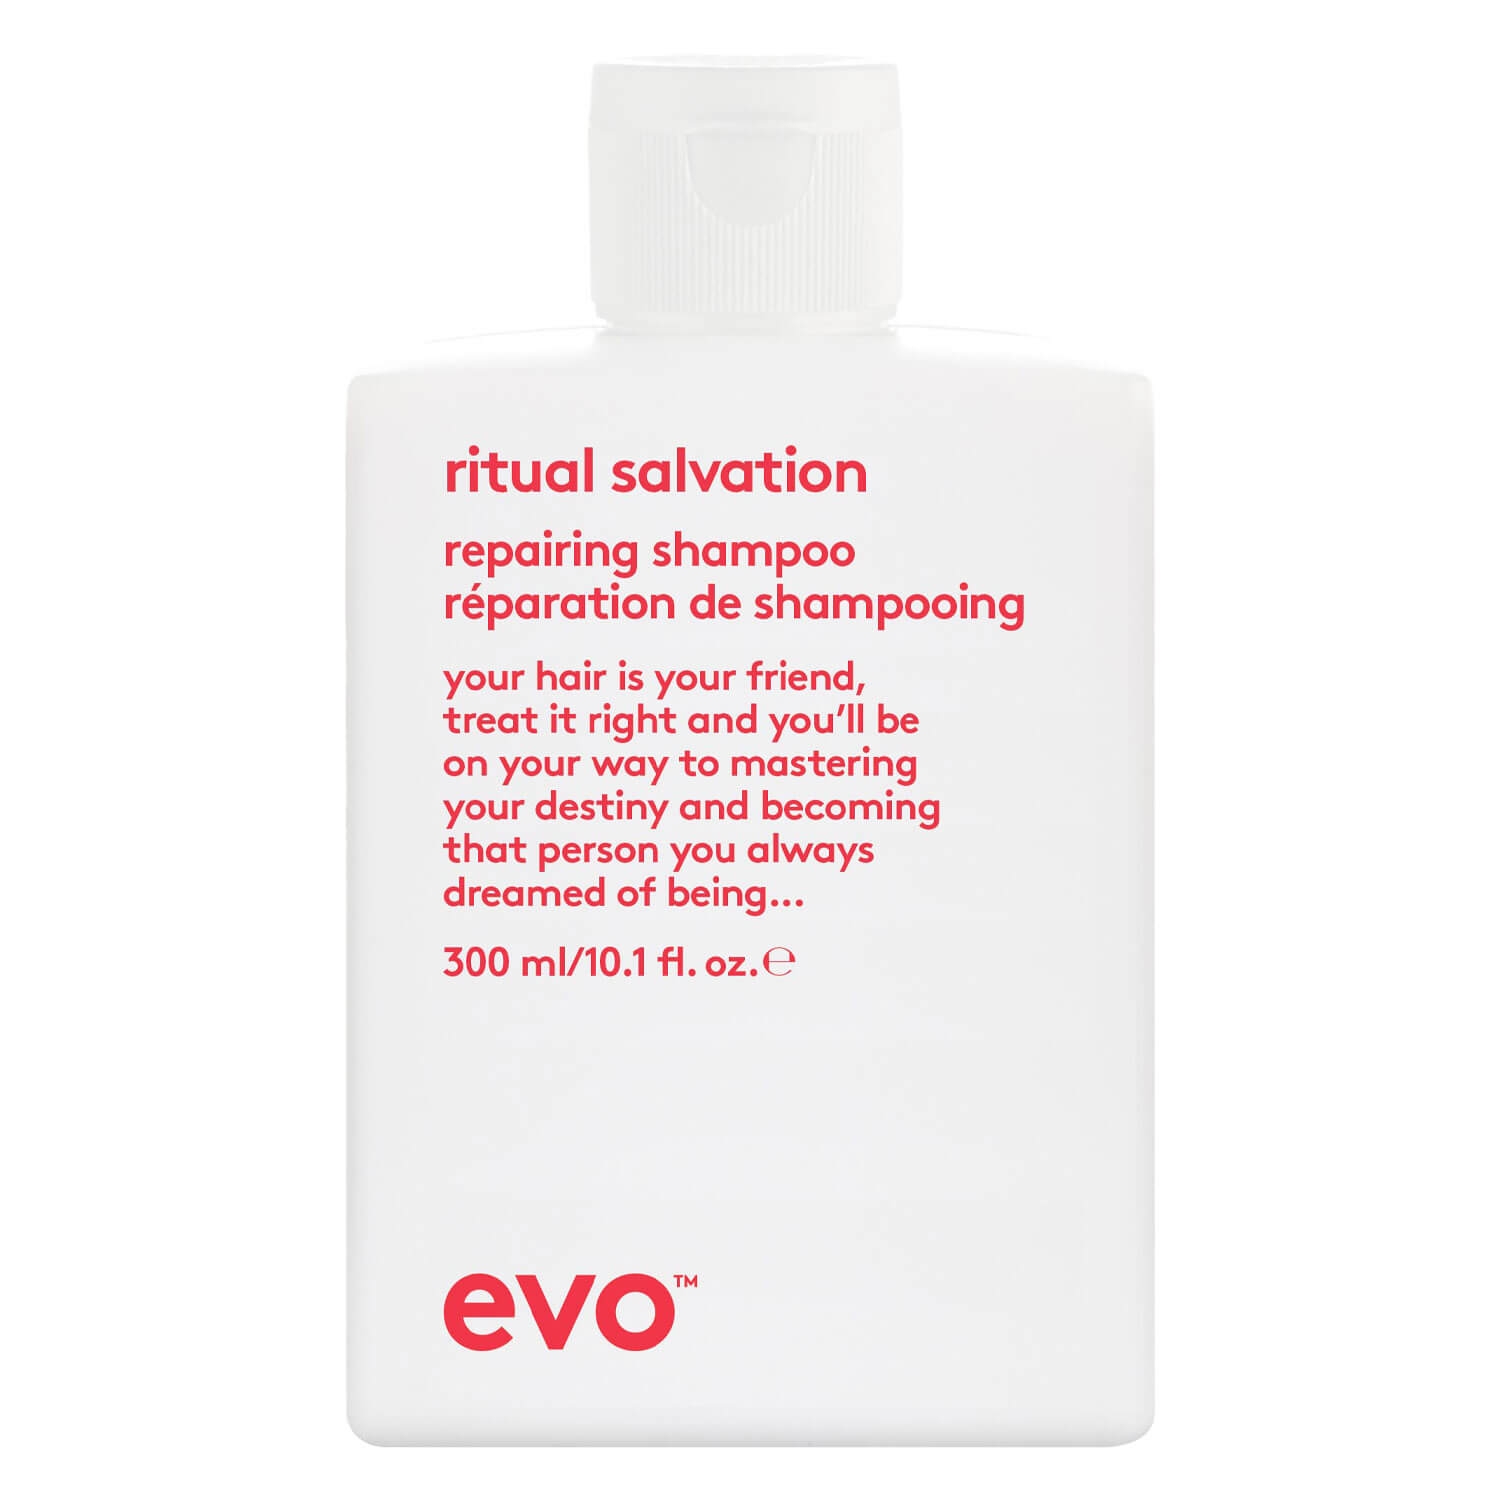 Produktbild von evo care - ritual salvation repairing shampoo